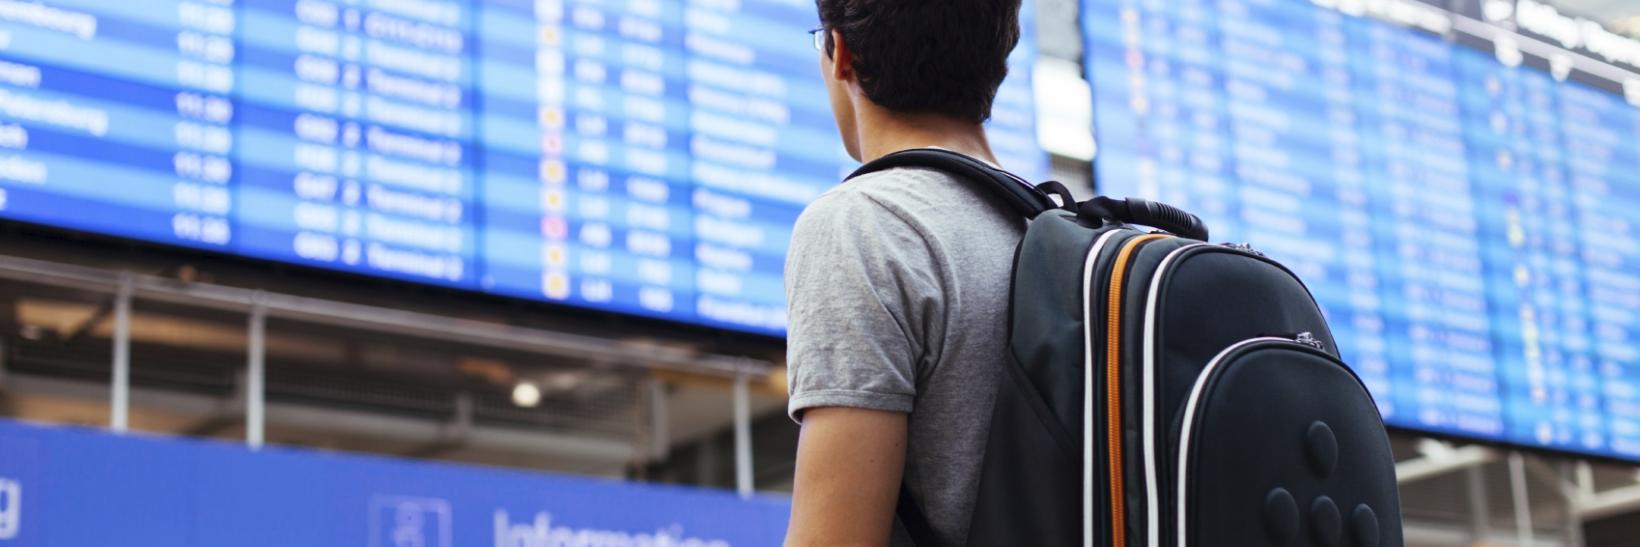 male traveler looking at airport flight schedule